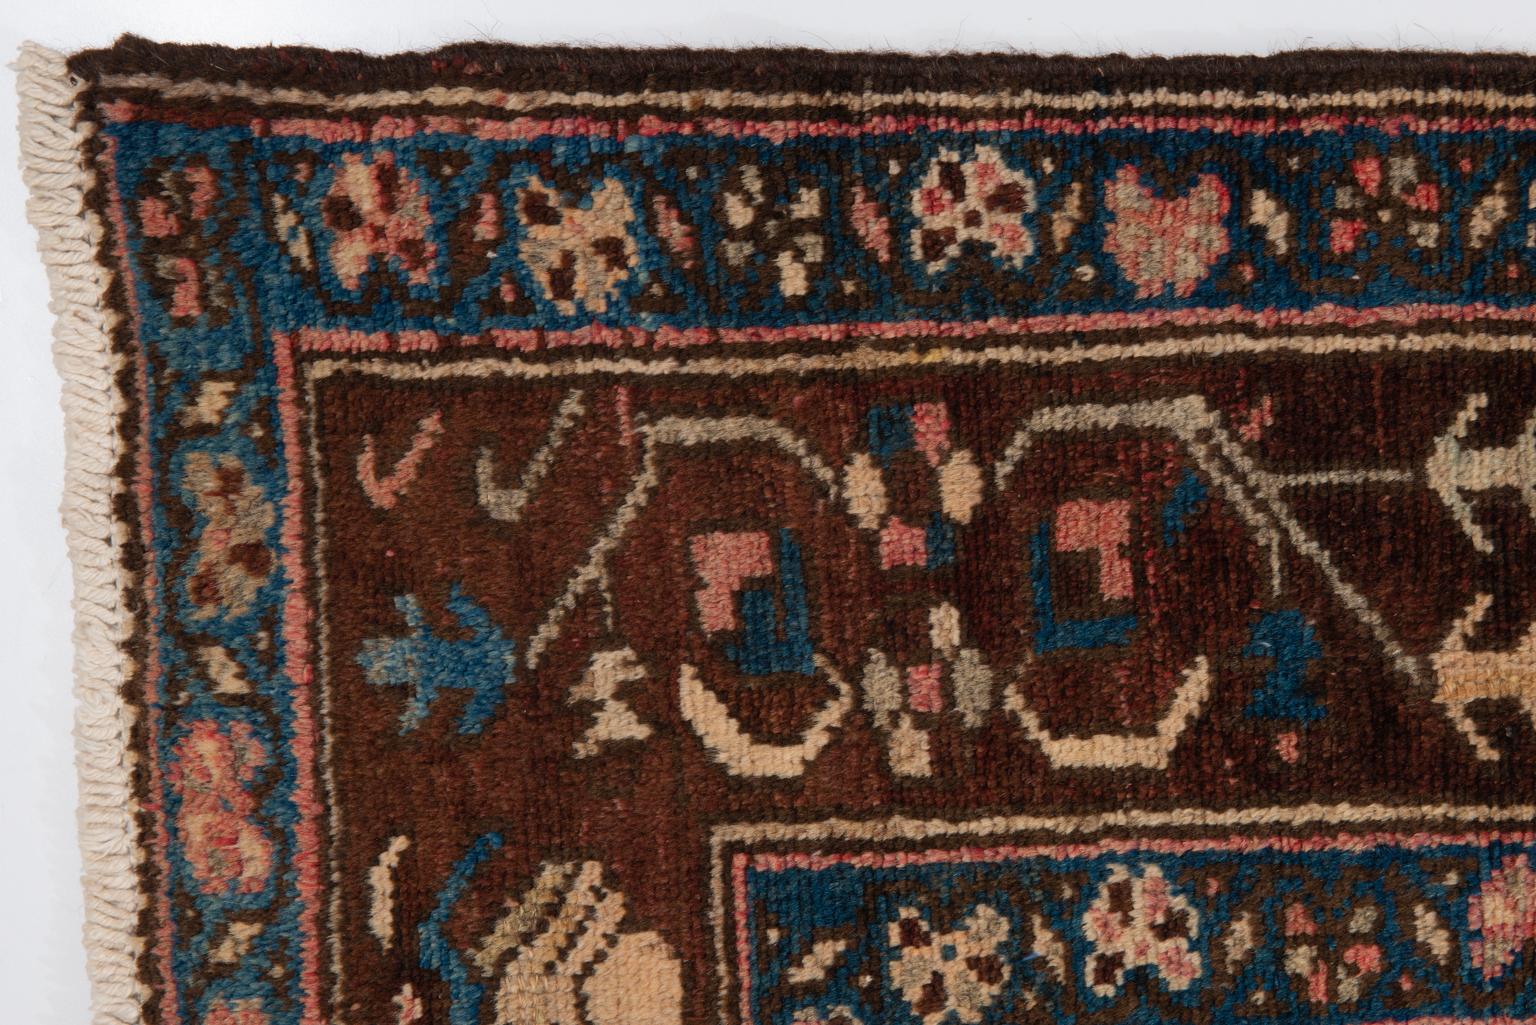 Wool Old Armenian Carpet or Rug For Sale